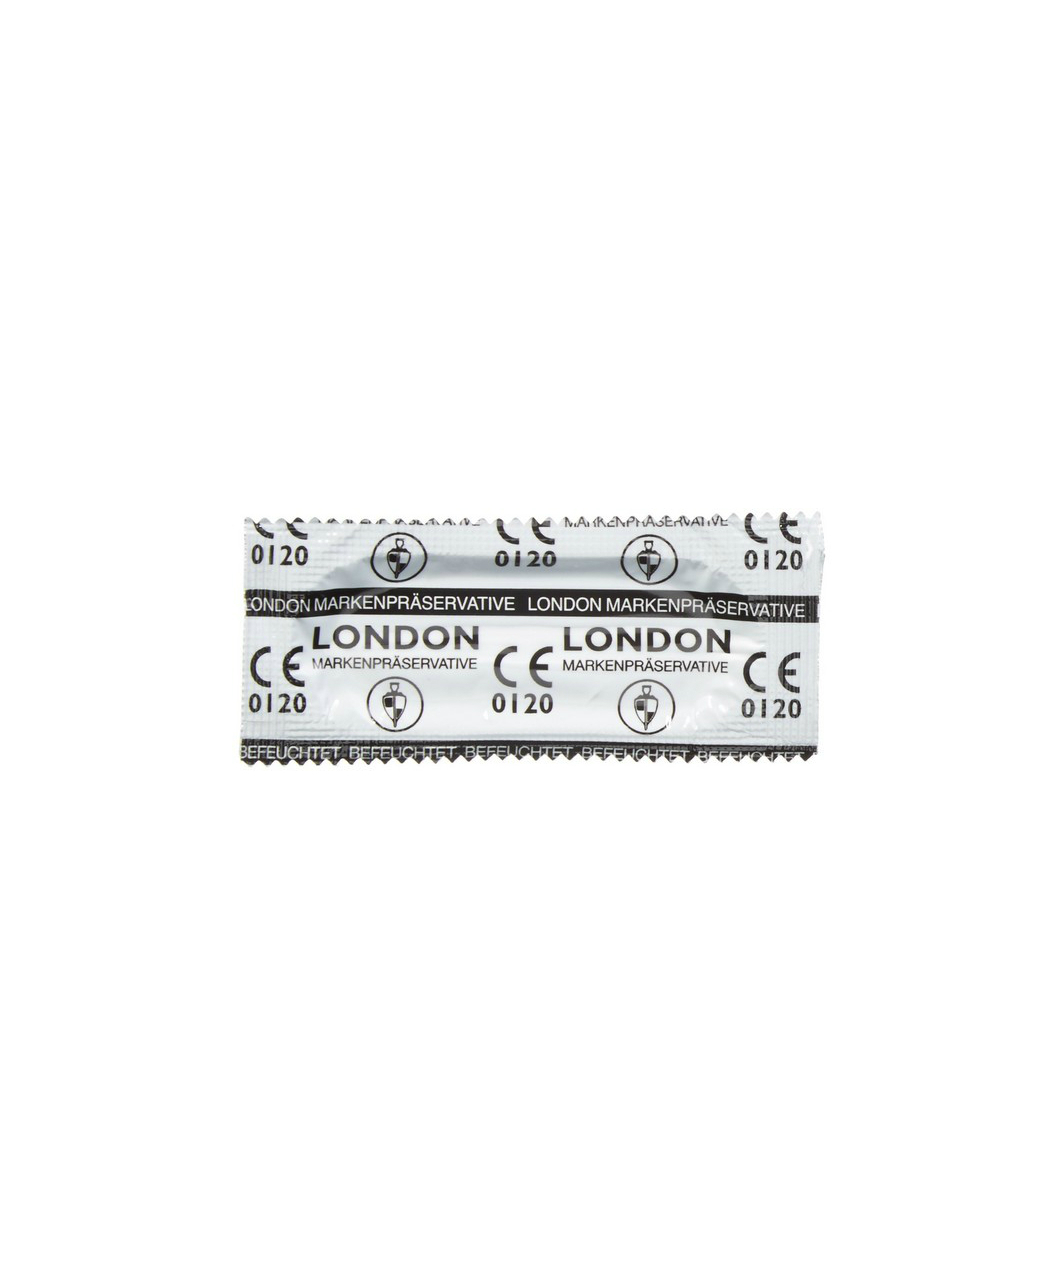 Durex London Q600 Lubricated презервативы (100 шт.)